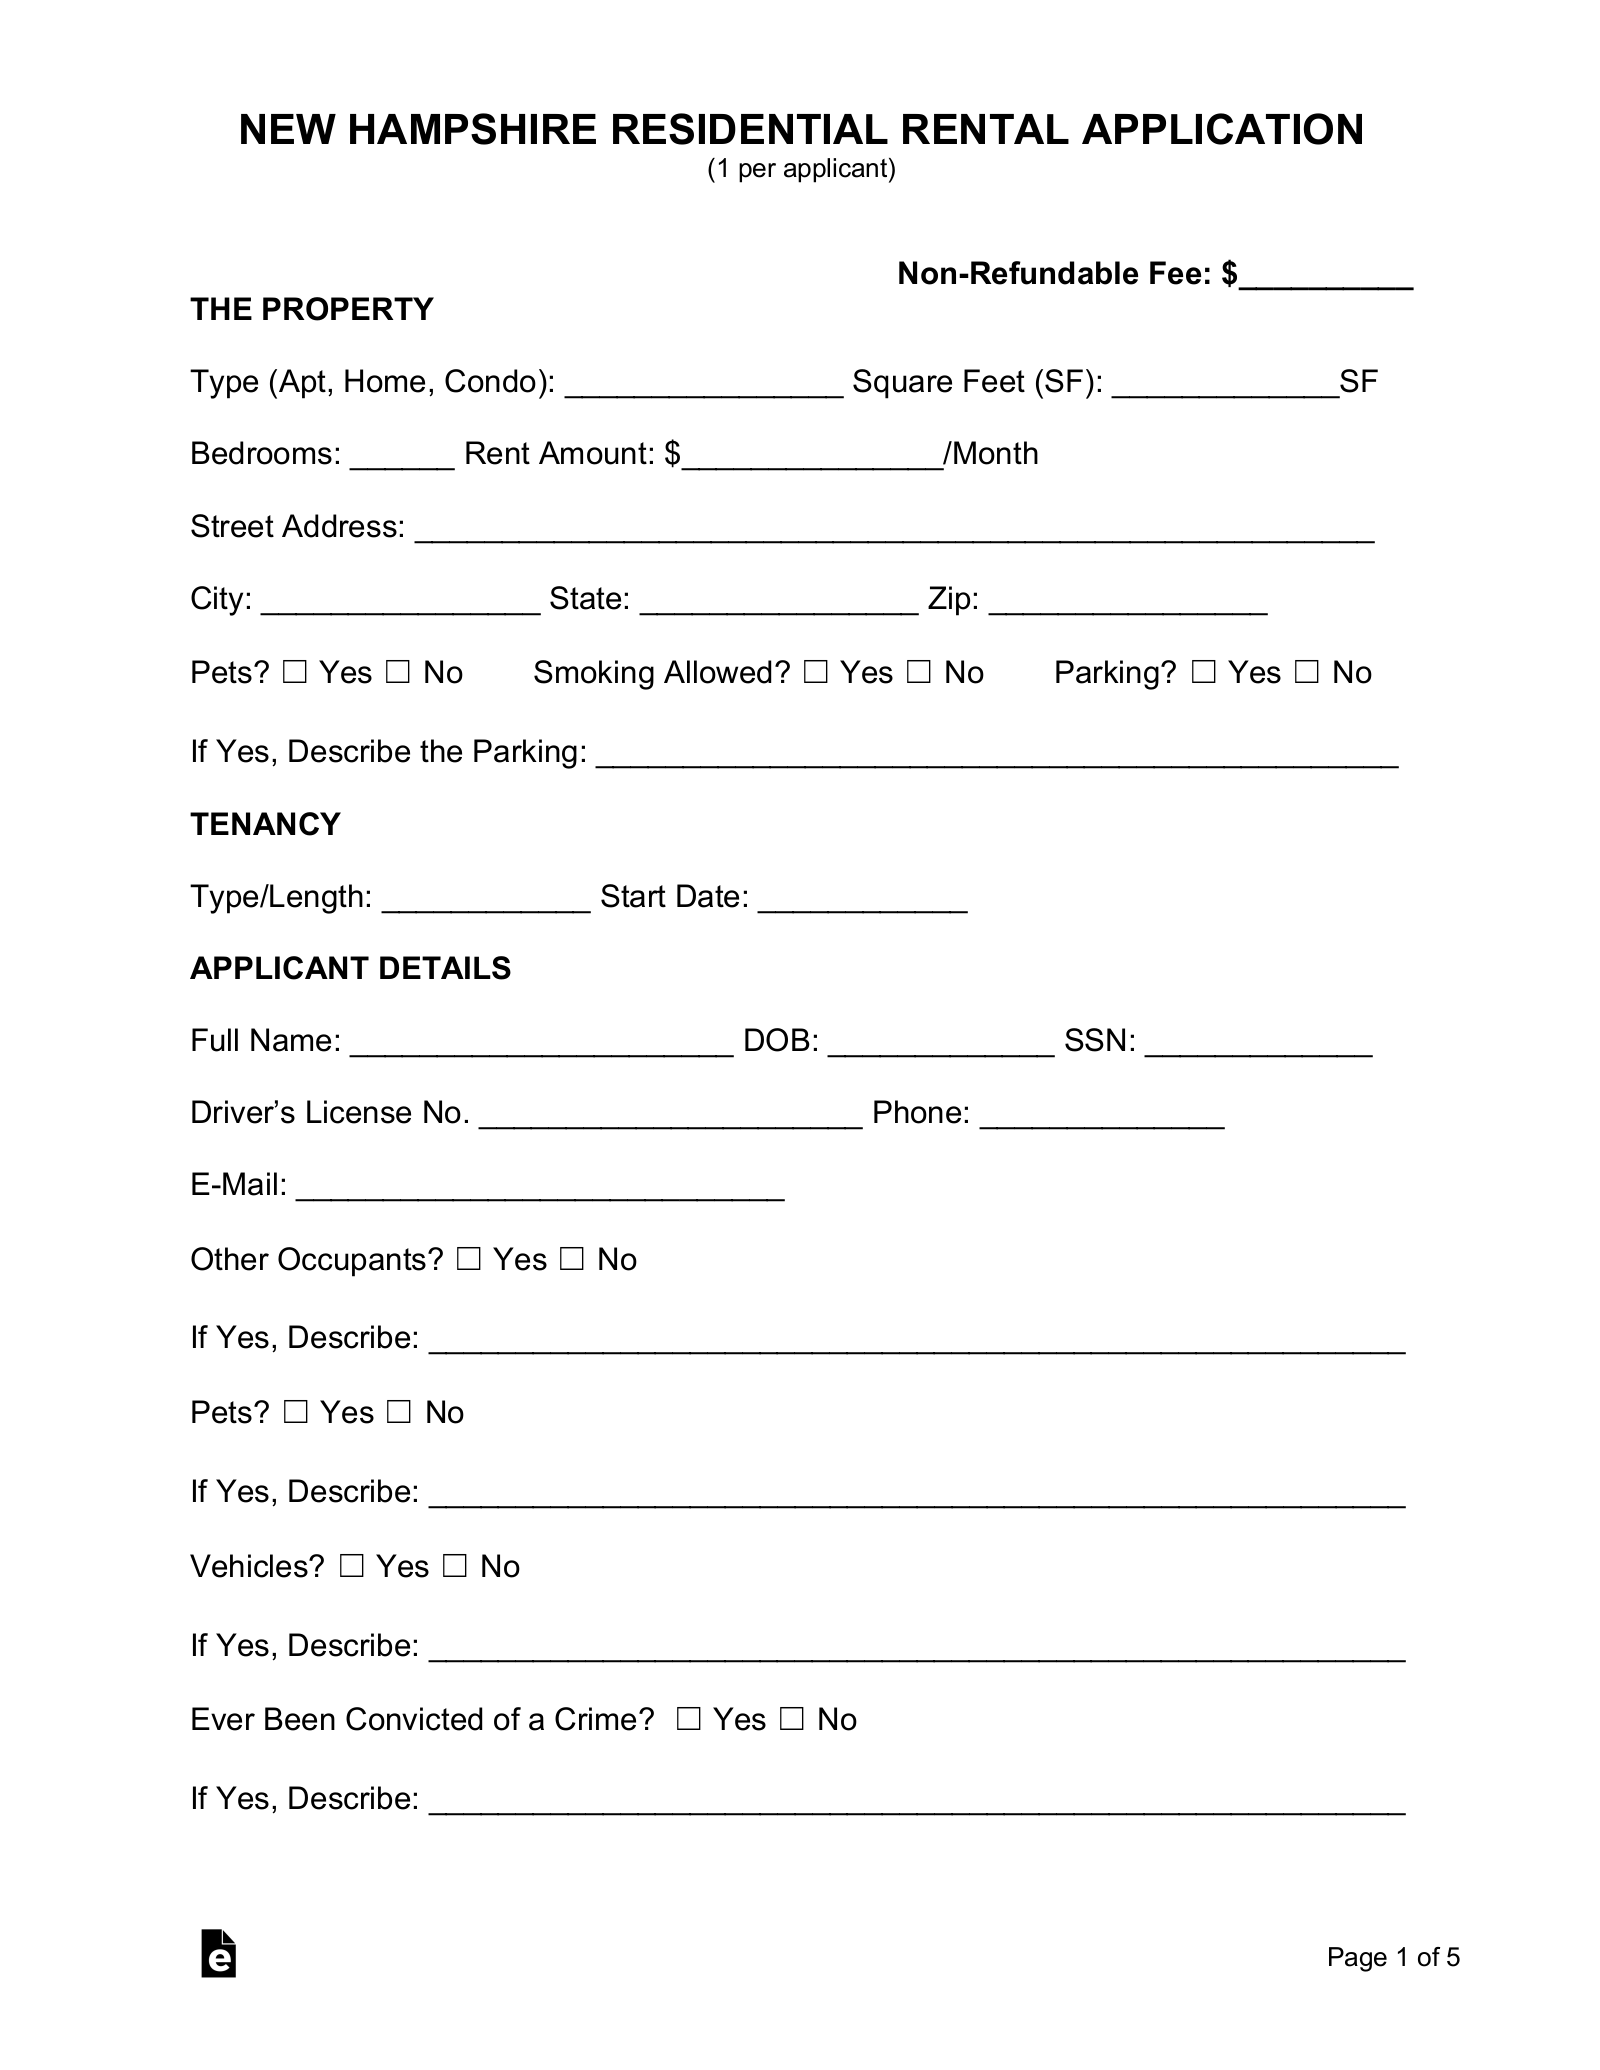 New Hampshire Rental Application Form